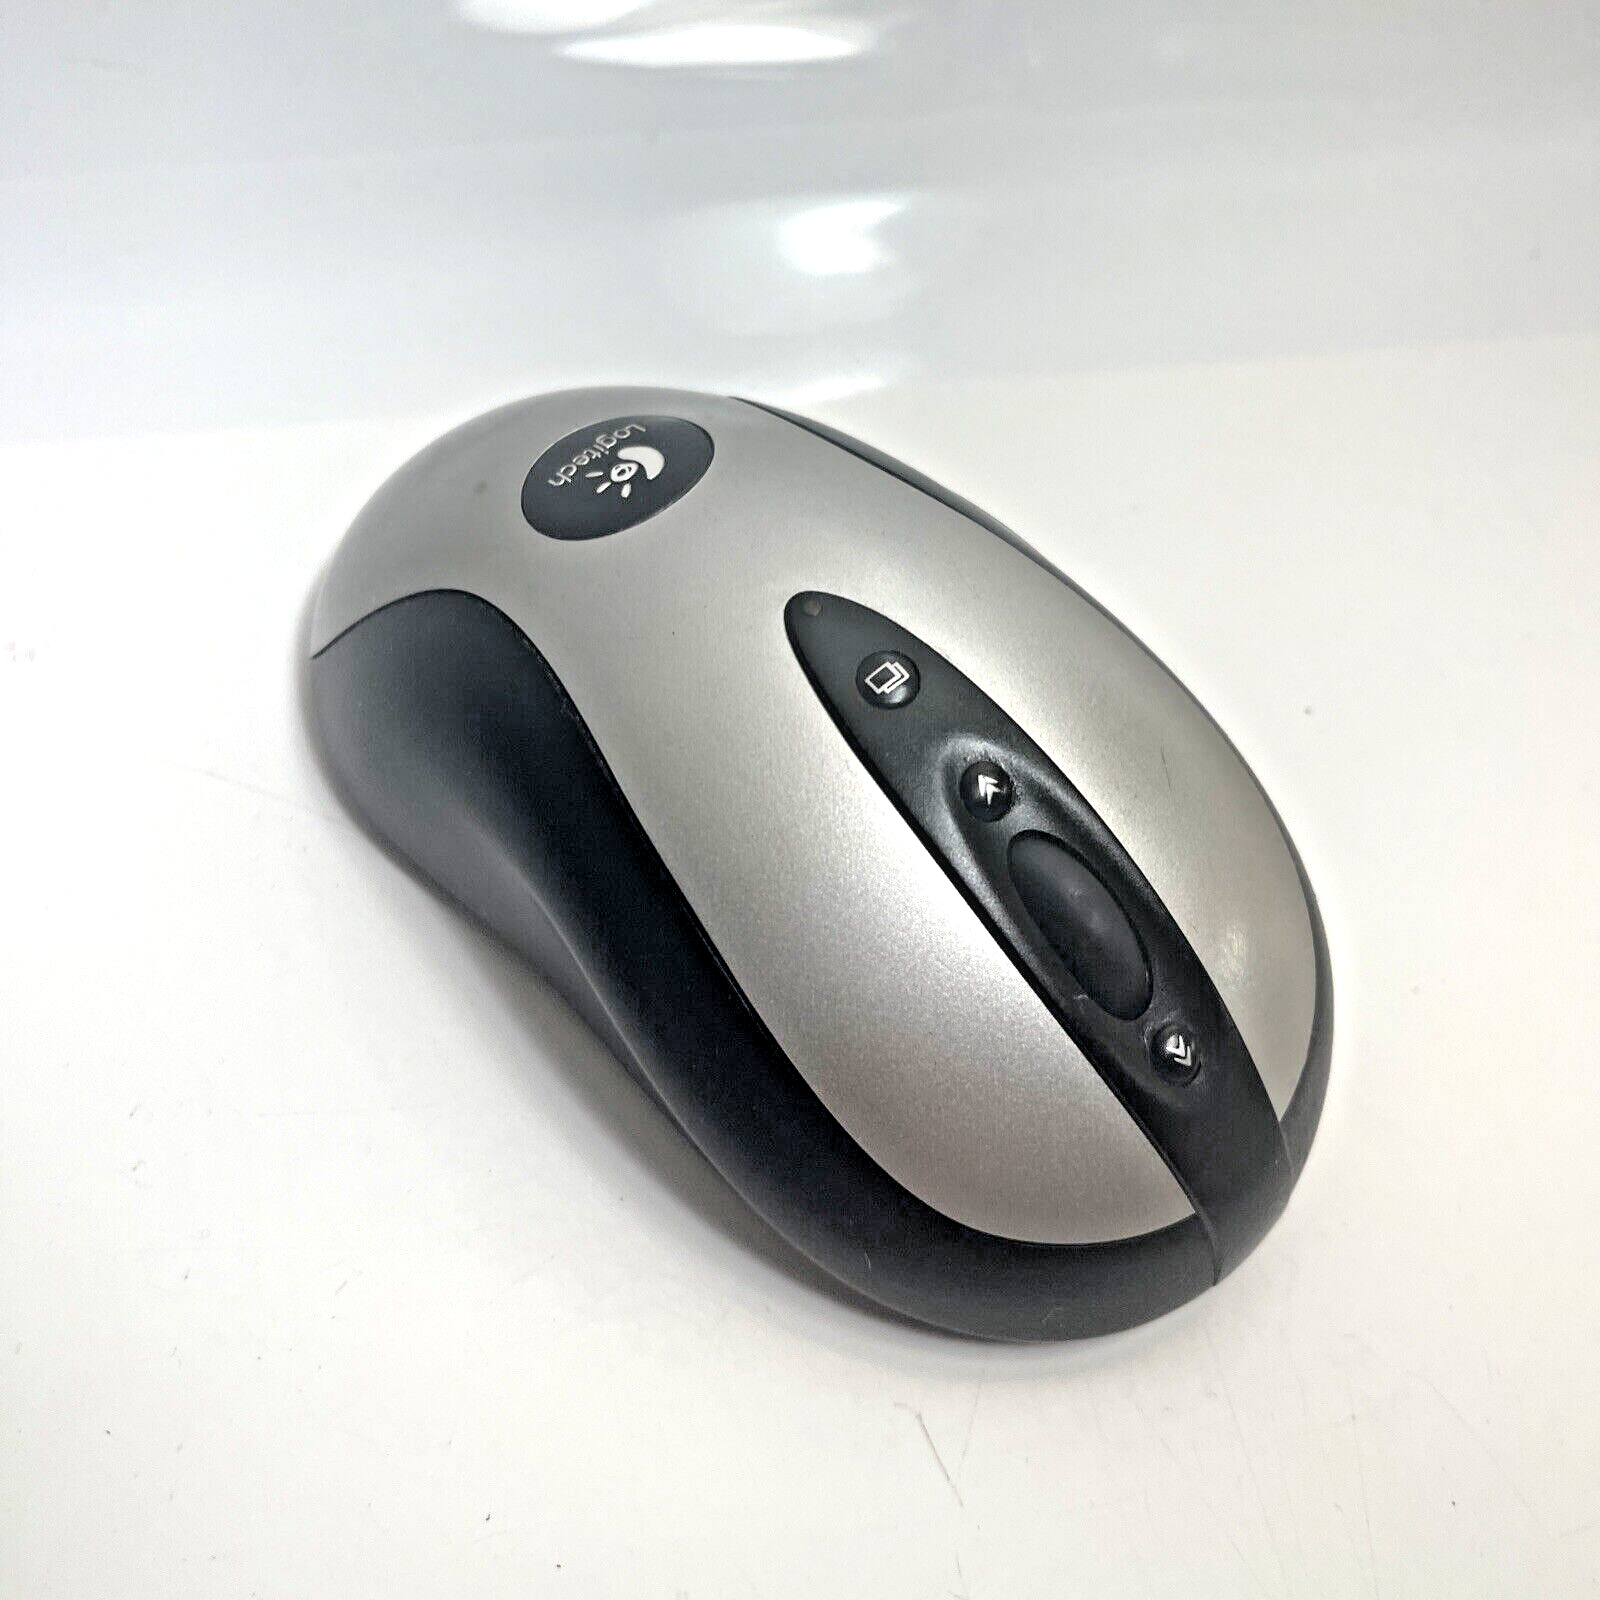 Logitech MX700 Cordless Optical Mouse 700 Mouse Only - VGC (930754-0403) | eBay